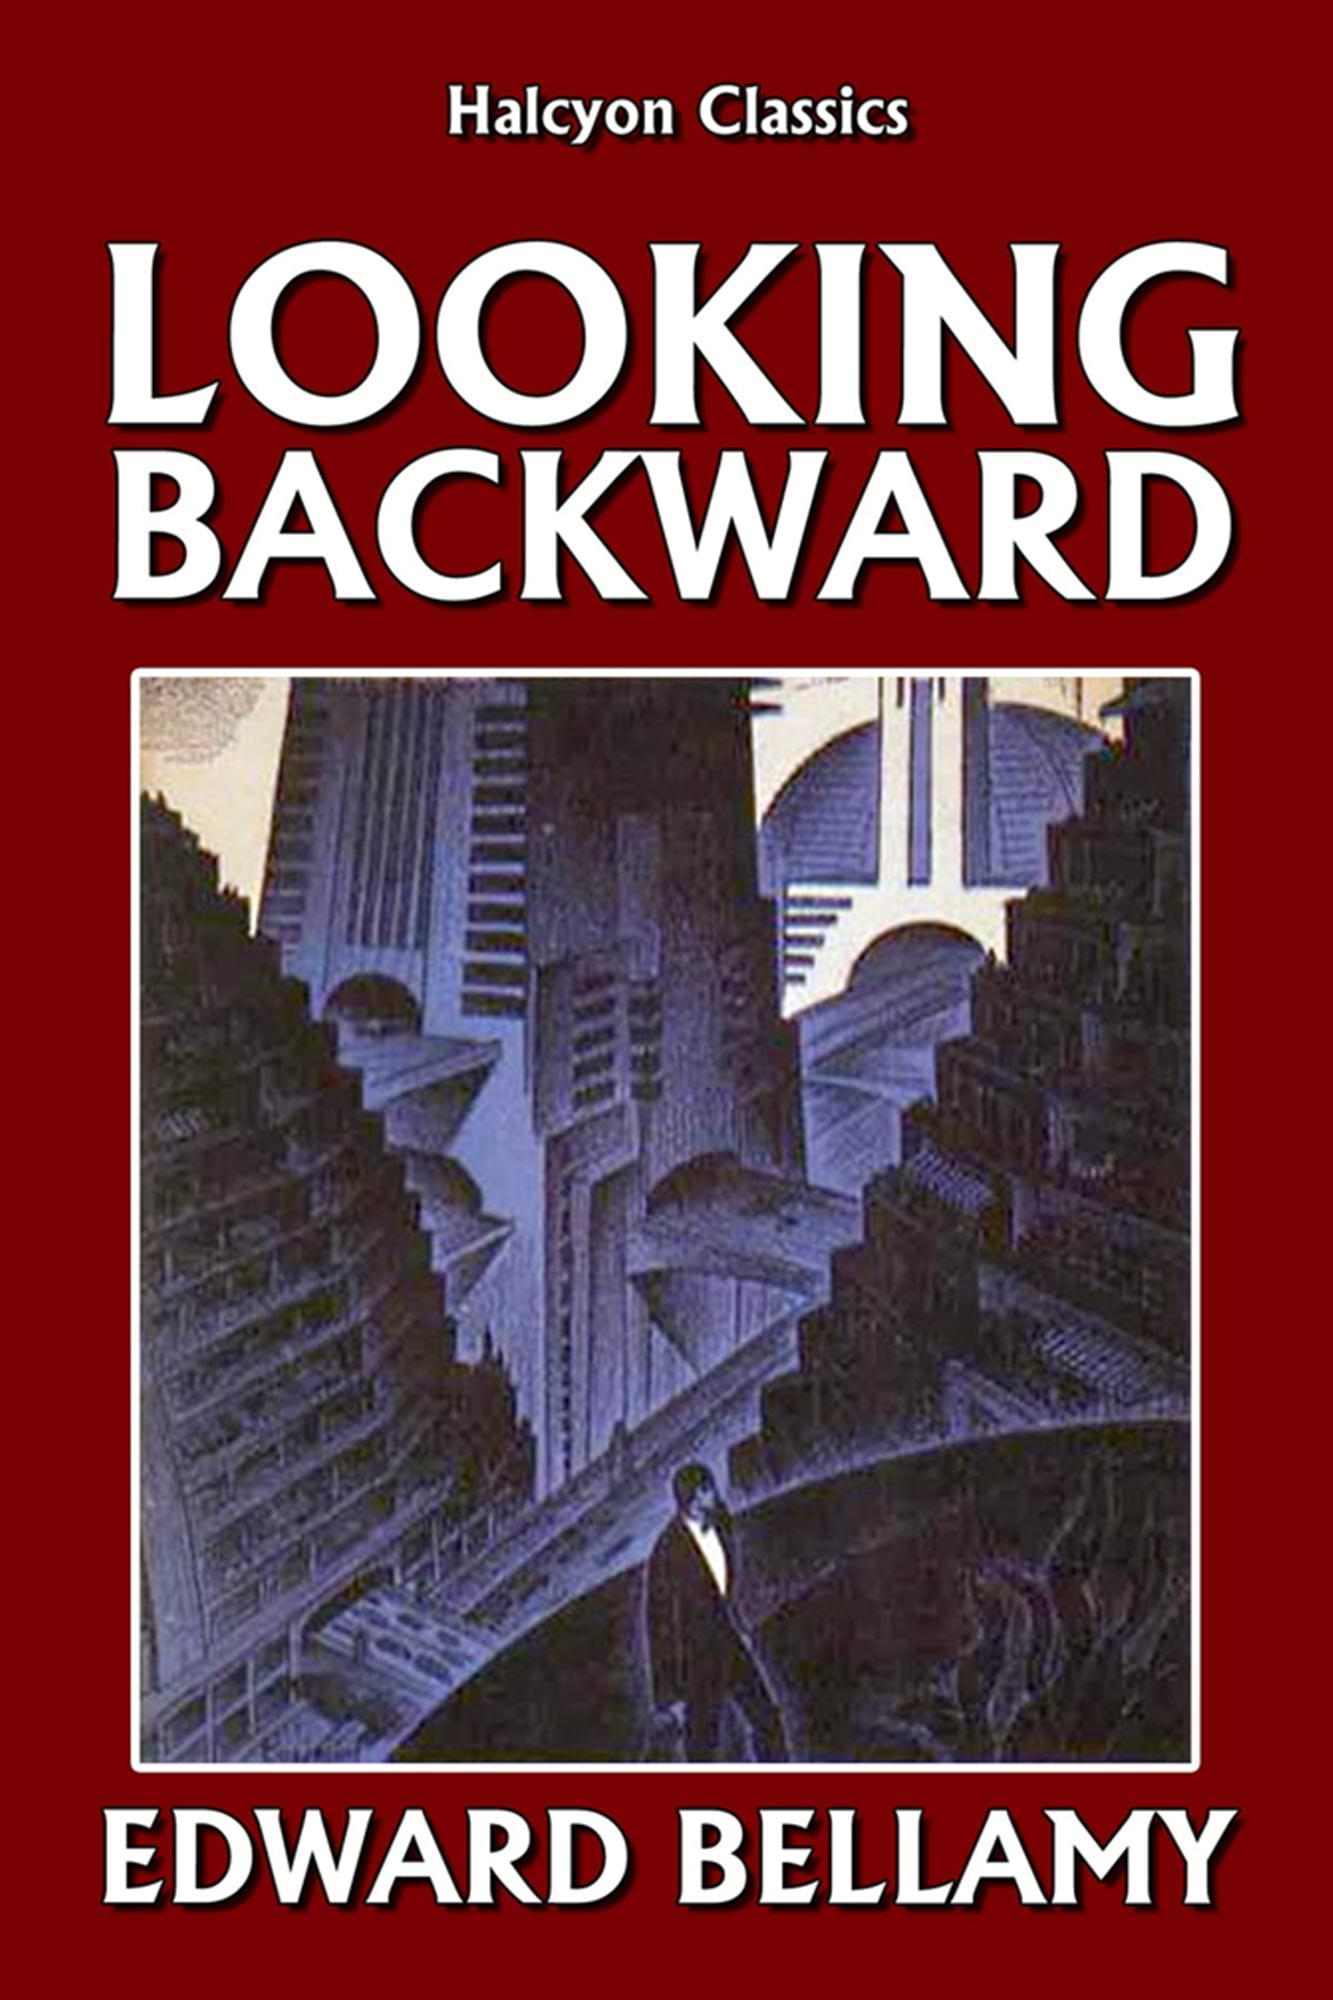 cover of Edward Bellamy's novel Looking Backward